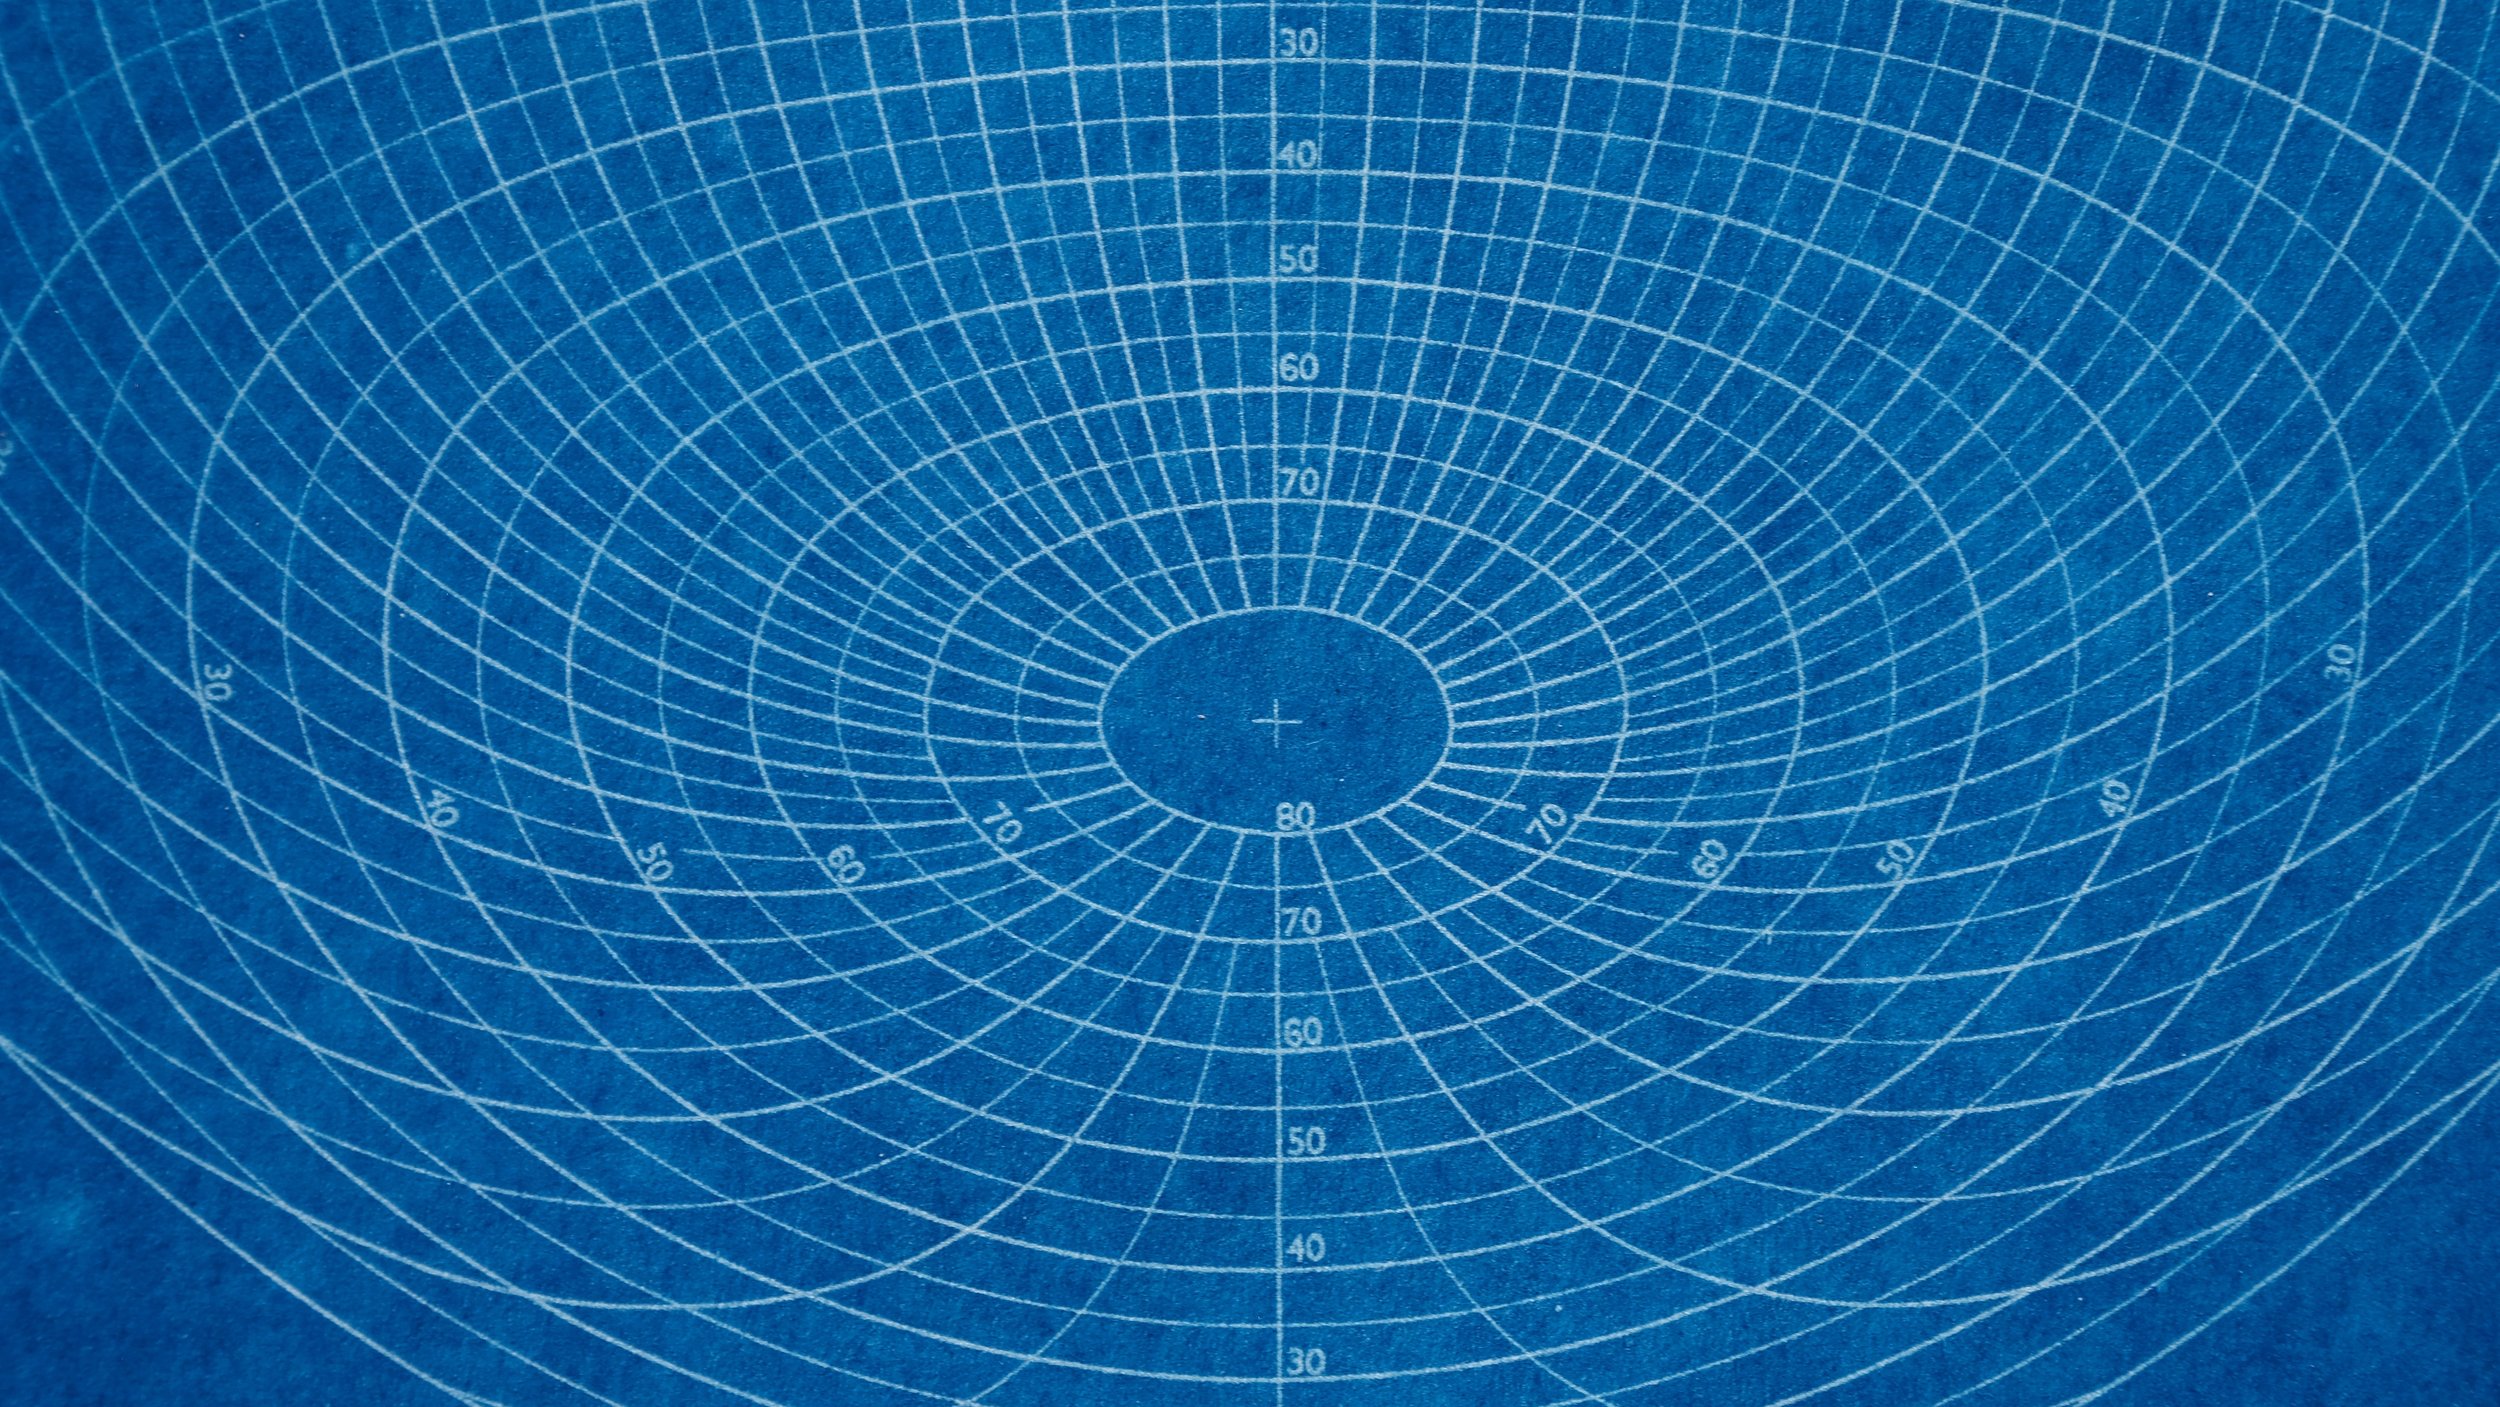  Rohini Devasher,  The Mirrored Sky , detail, 2018, Cyanotype on paper, 17 x 12.5 cm 